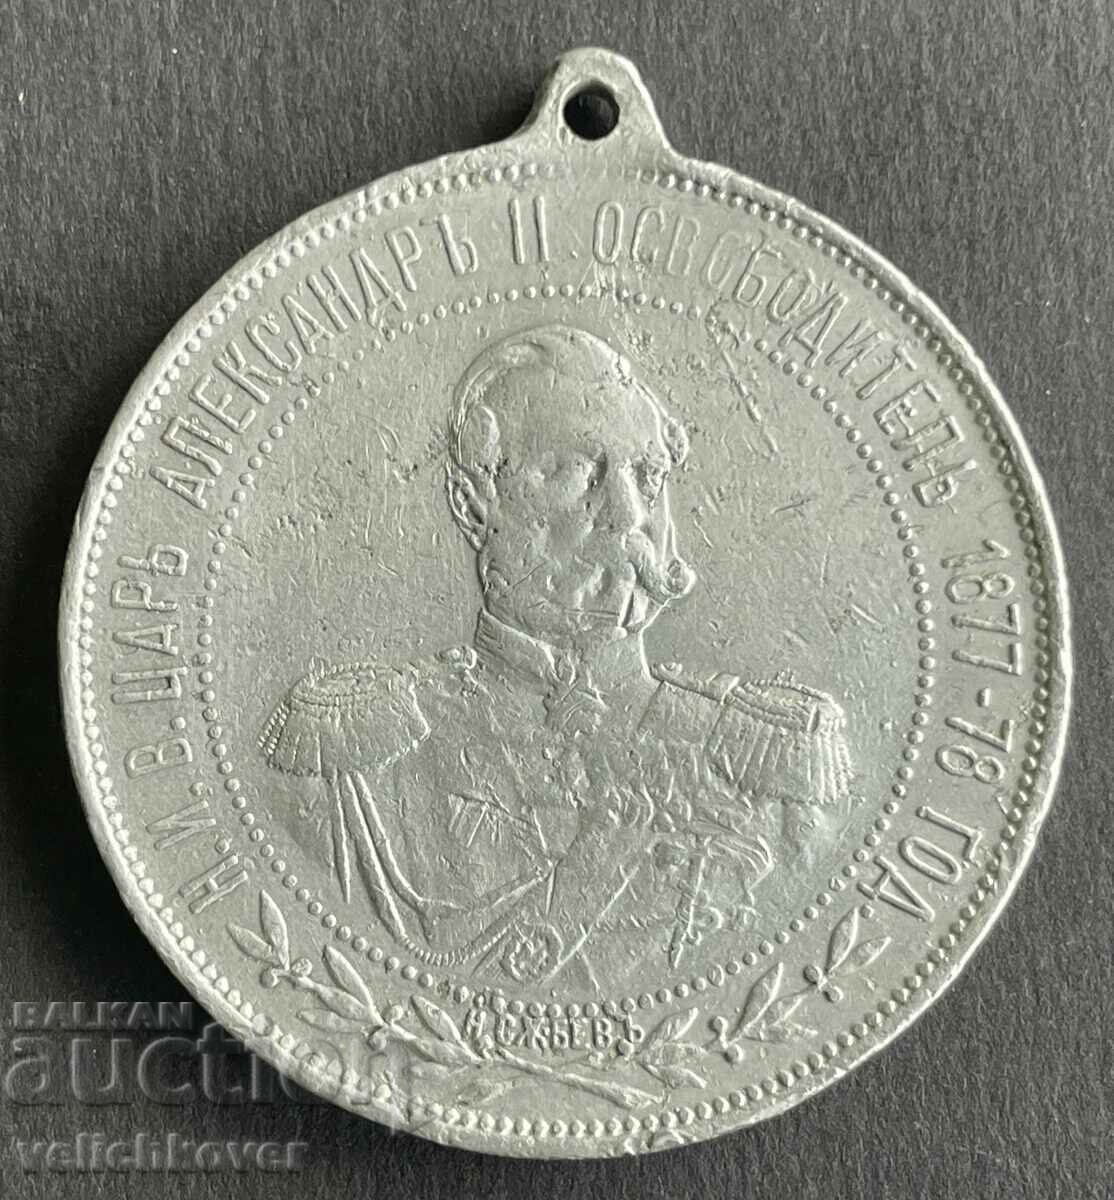 35409 Царство България медал Шипка Император Александър II